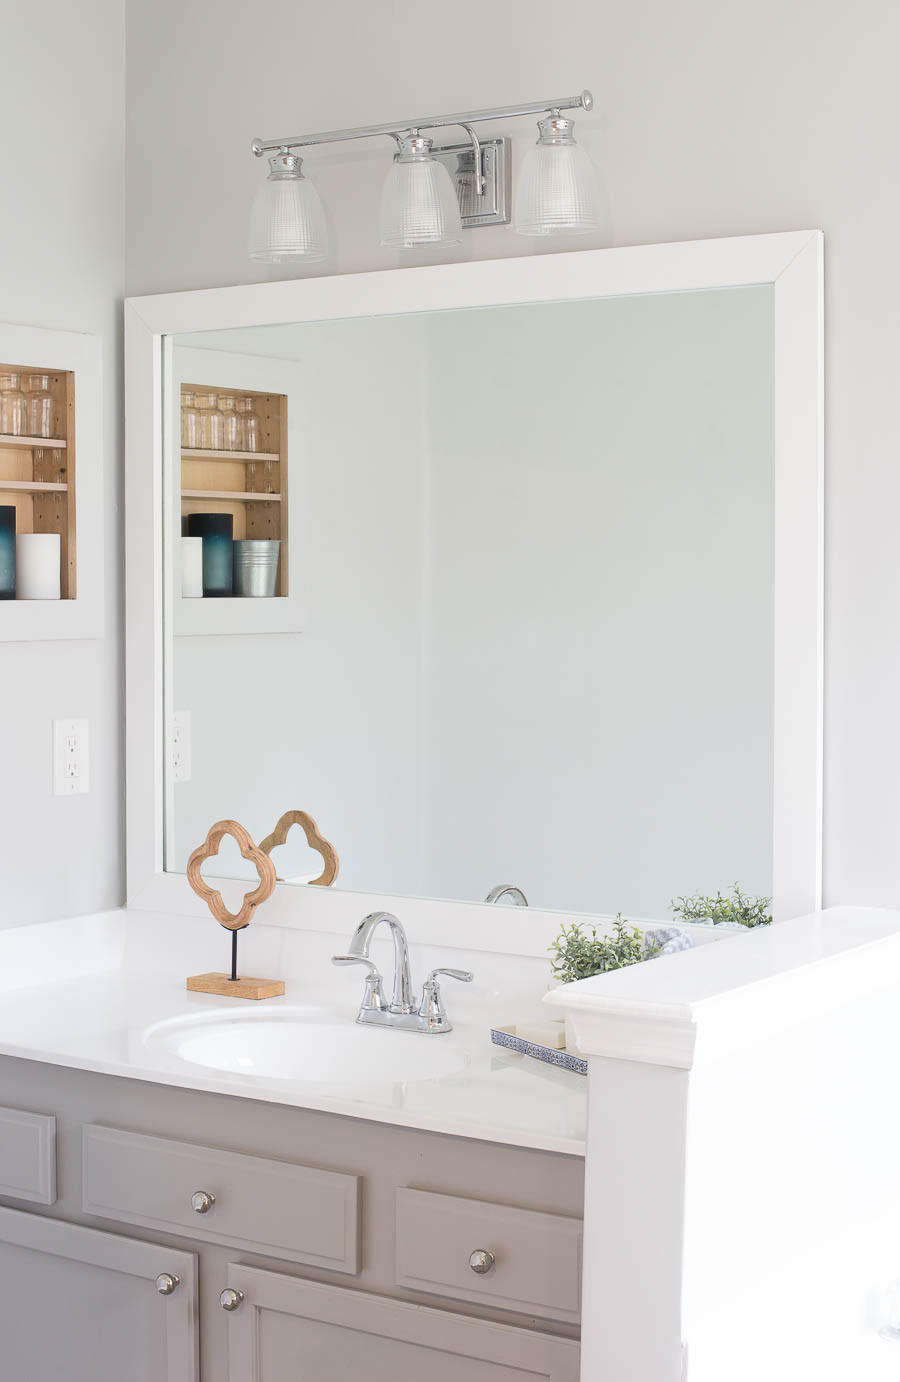 White Framed Bathroom Mirrors
 How to Frame a Bathroom Mirror Easy DIY project